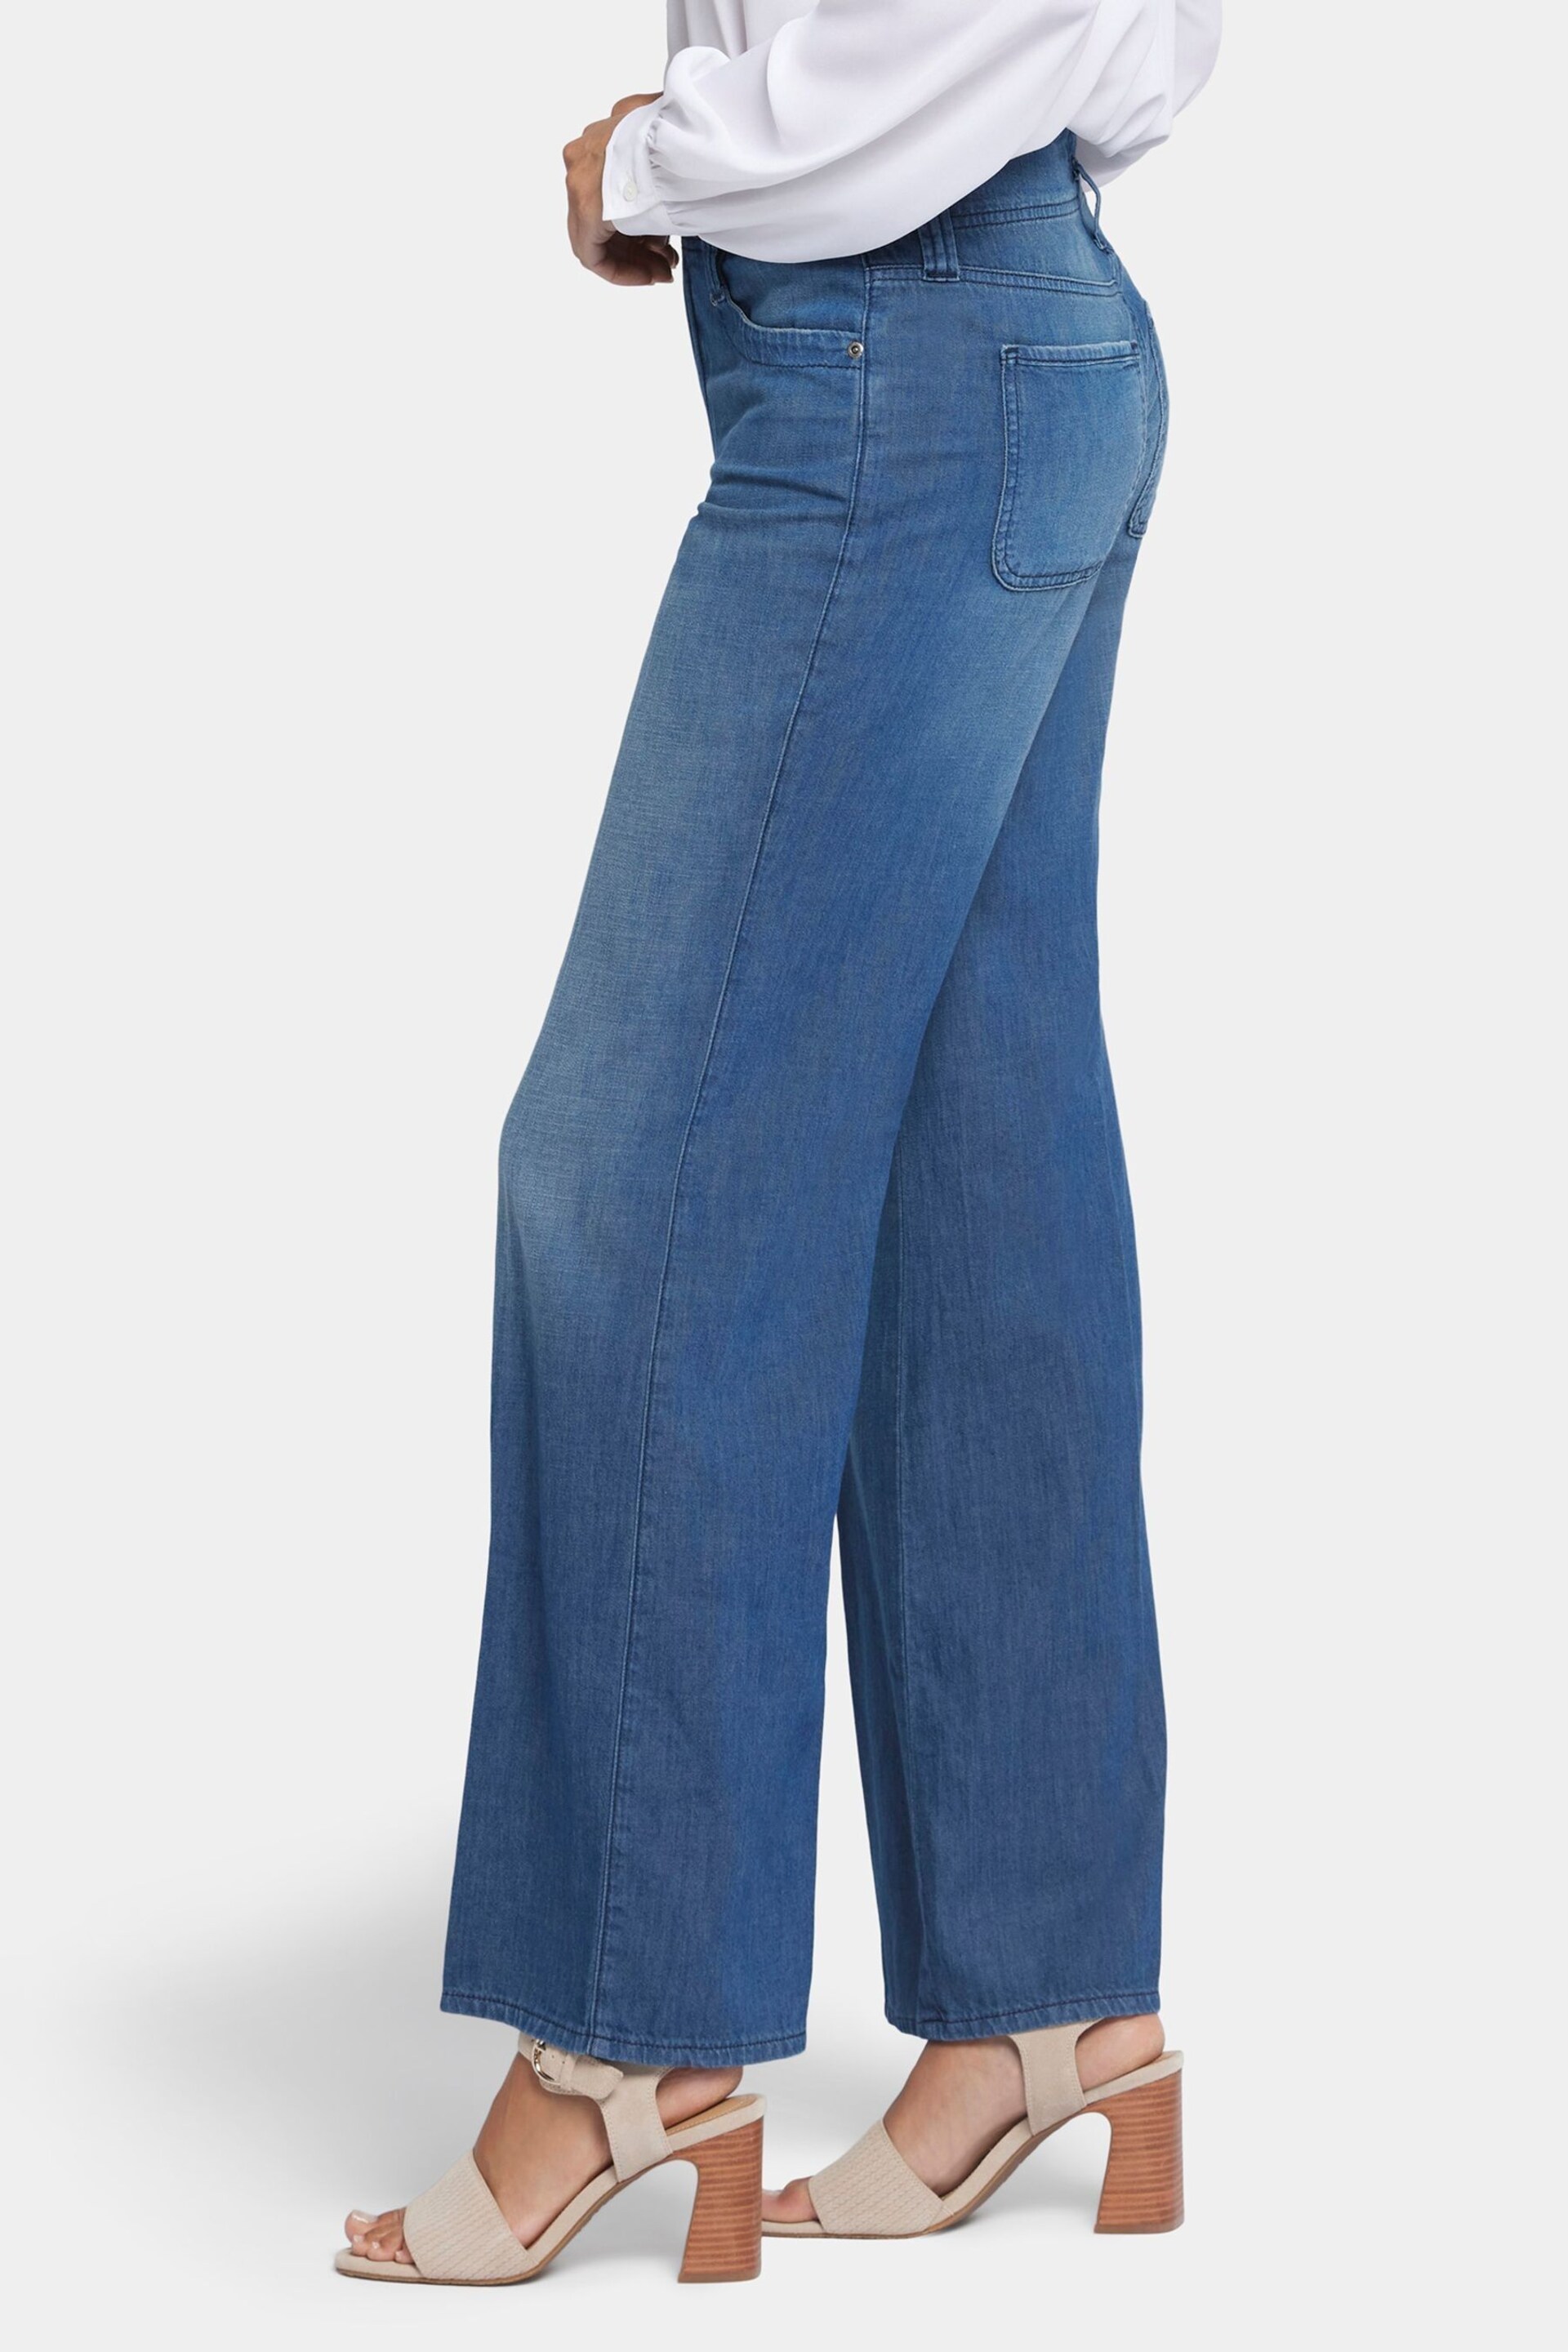 NYDJ Blue High Rise Teresa Wide Leg Jeans - Image 5 of 7